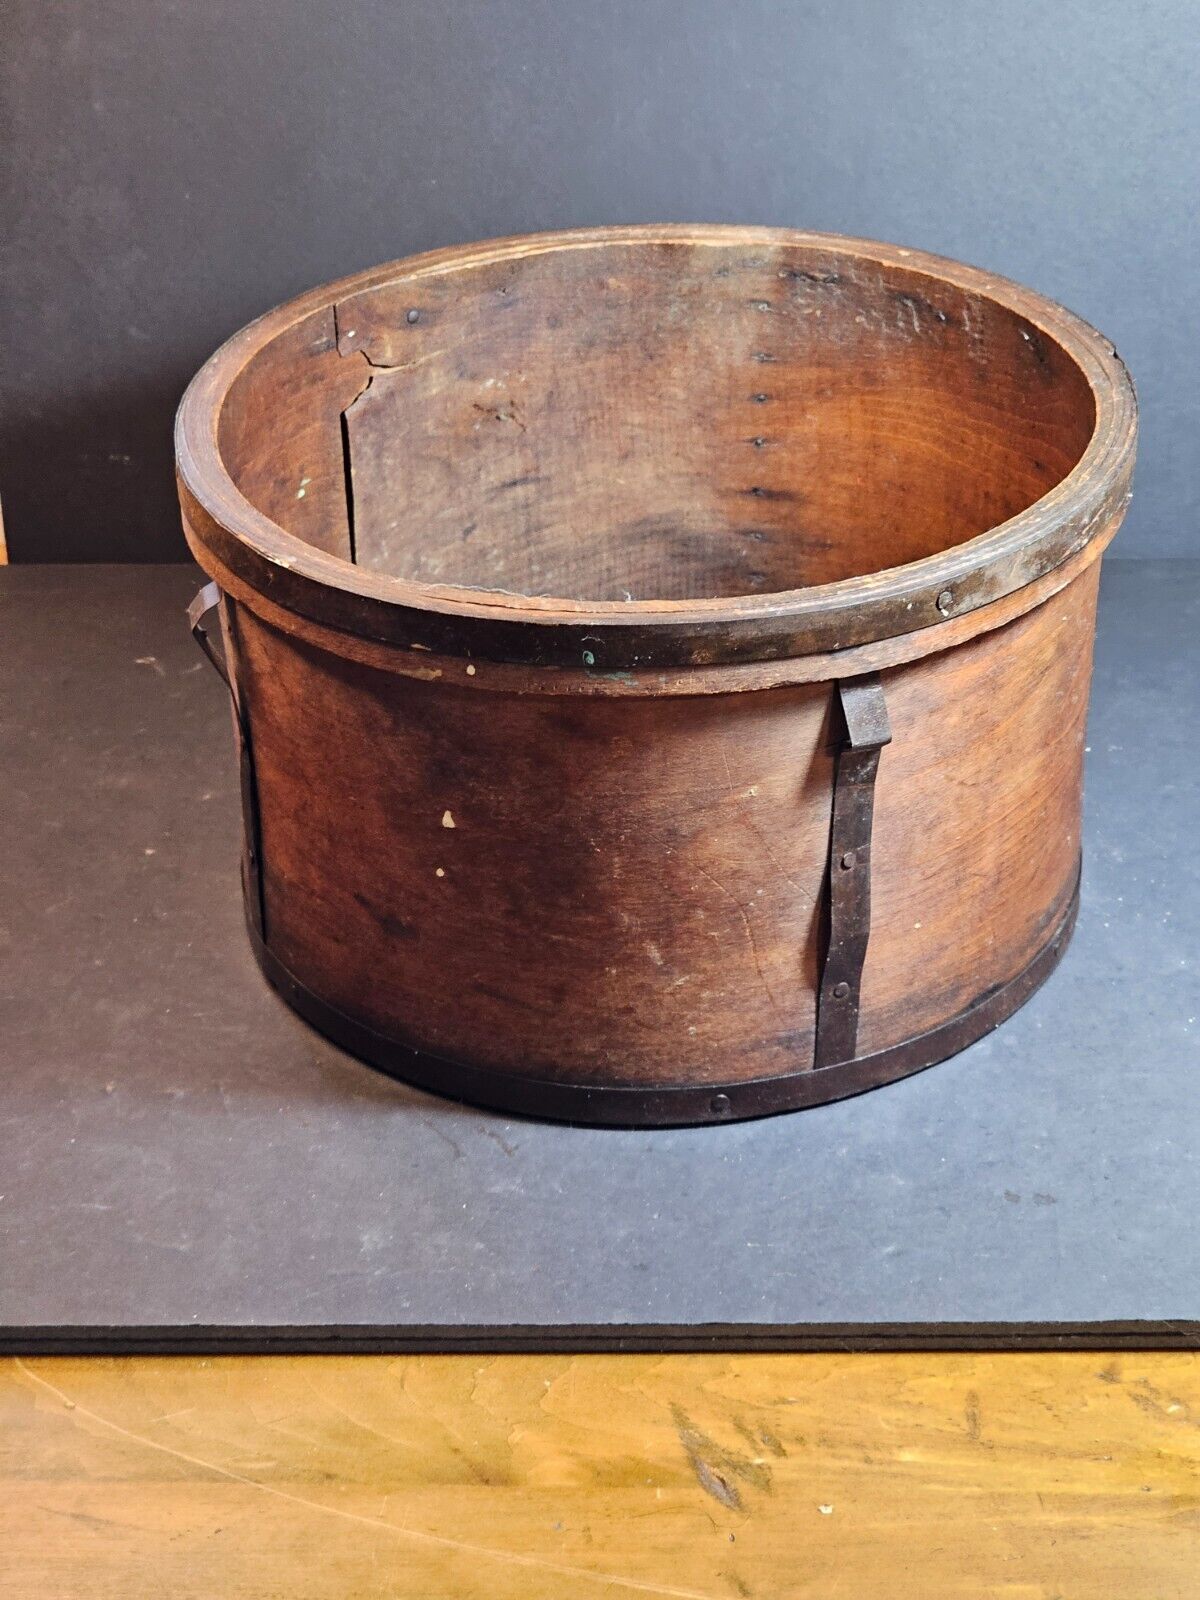 Primitive wood and metal wooden tub no lid unique piece of history